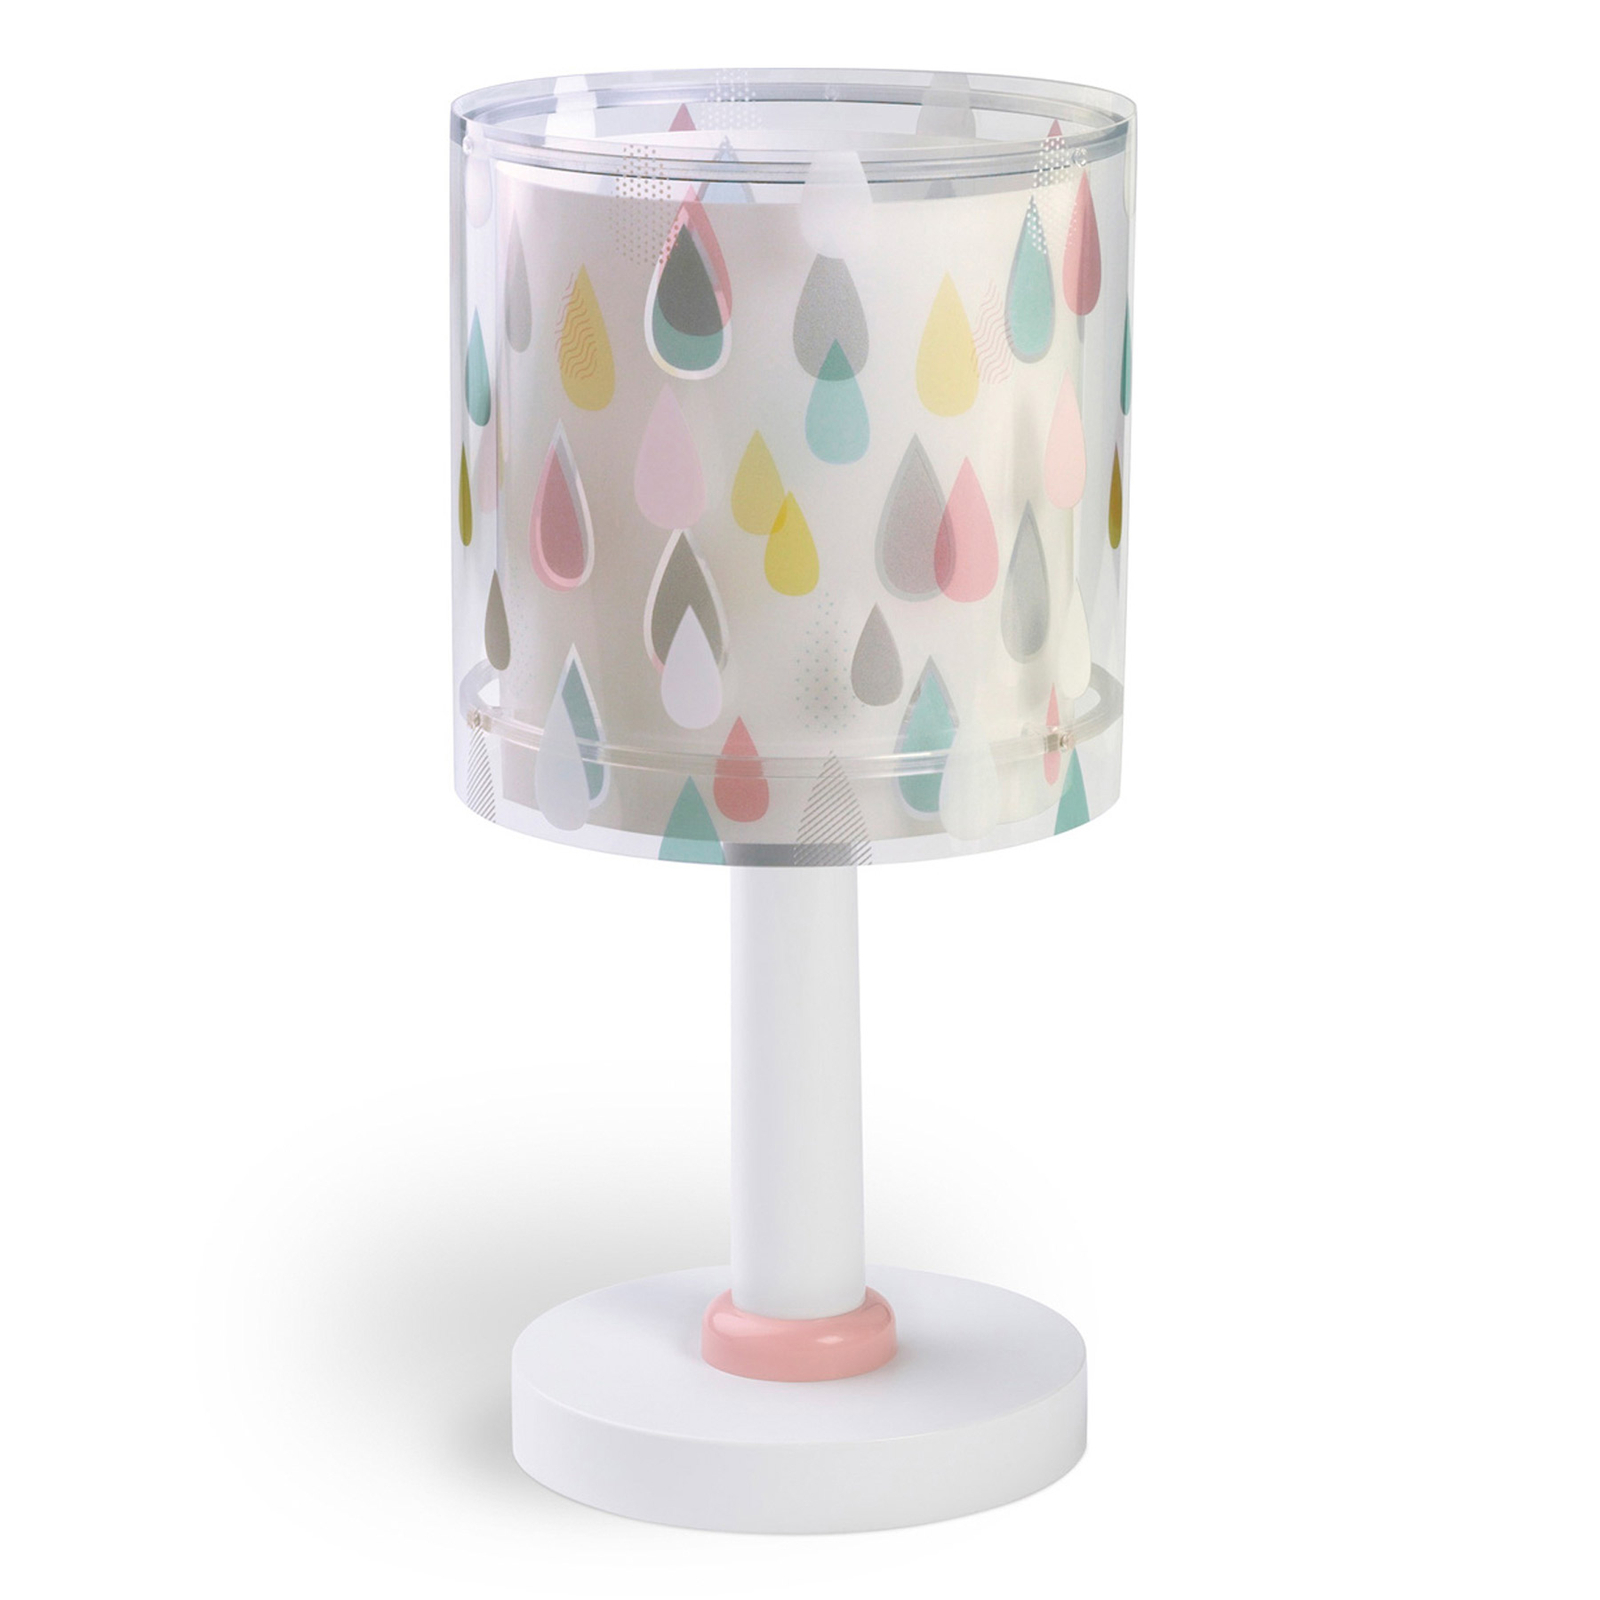 Dalber Color Rain bordlampe med dobbel skjerm